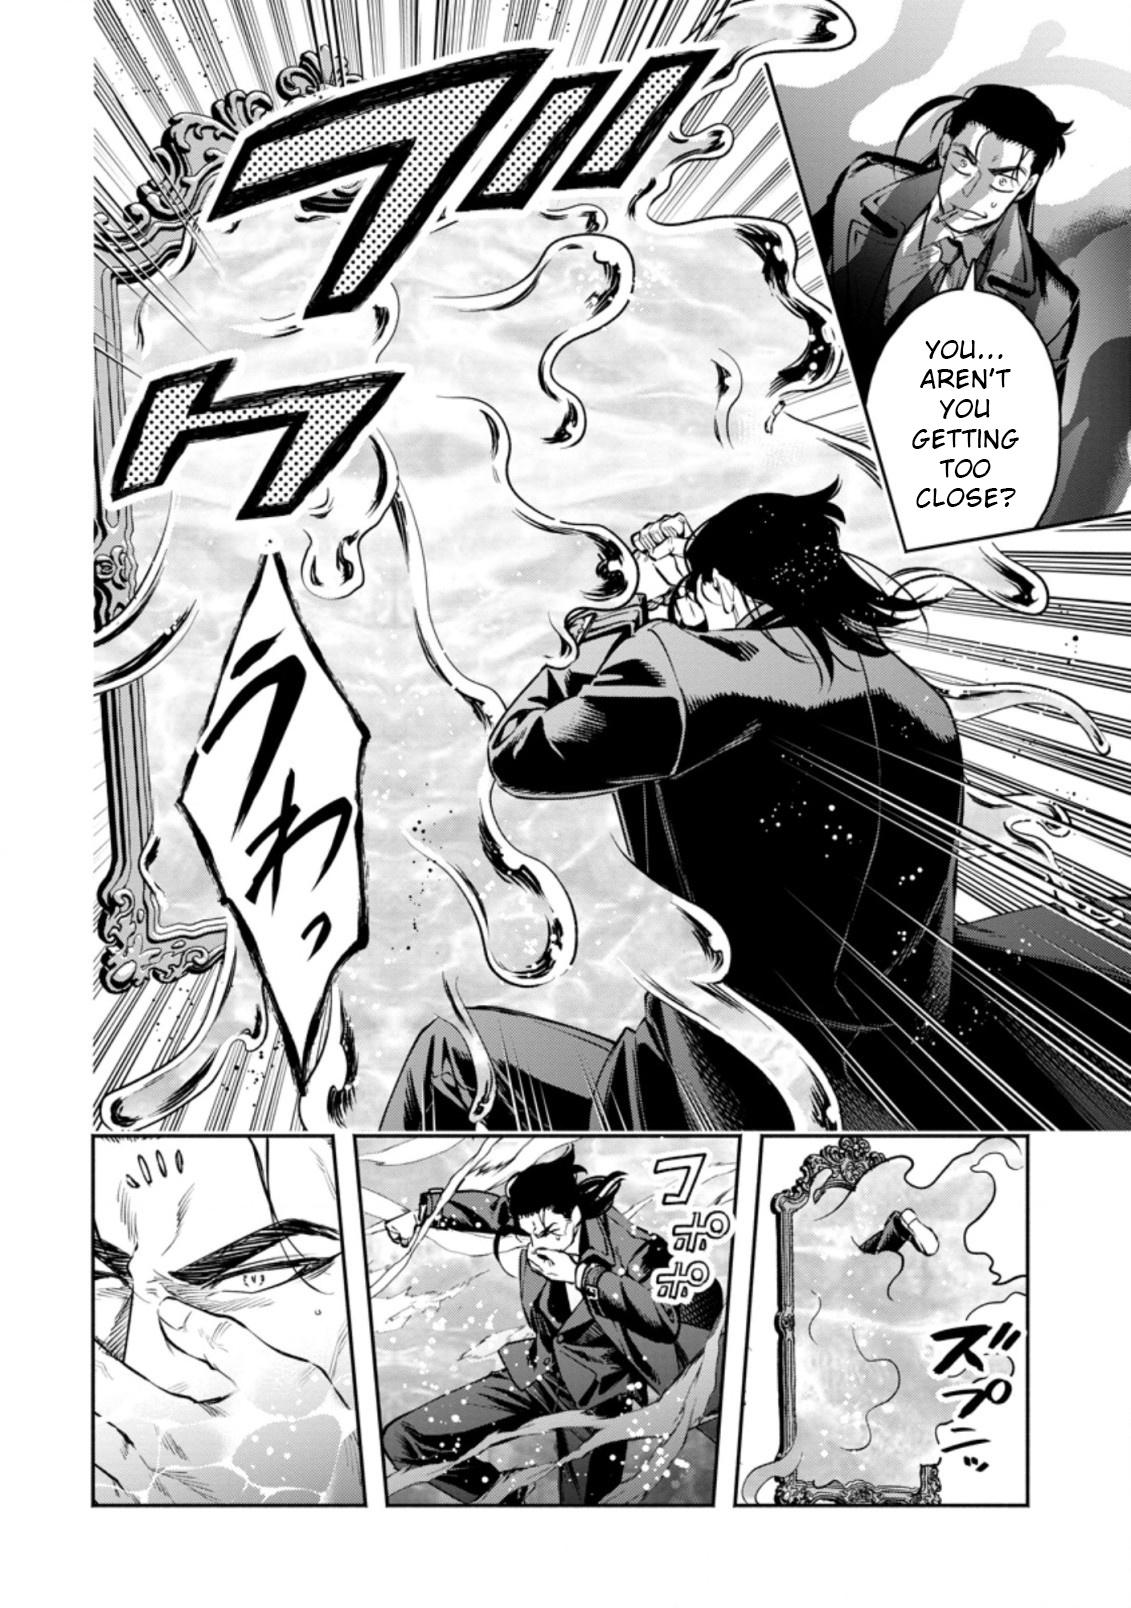 Maou-sama, Retry! R Manga Chapter 2